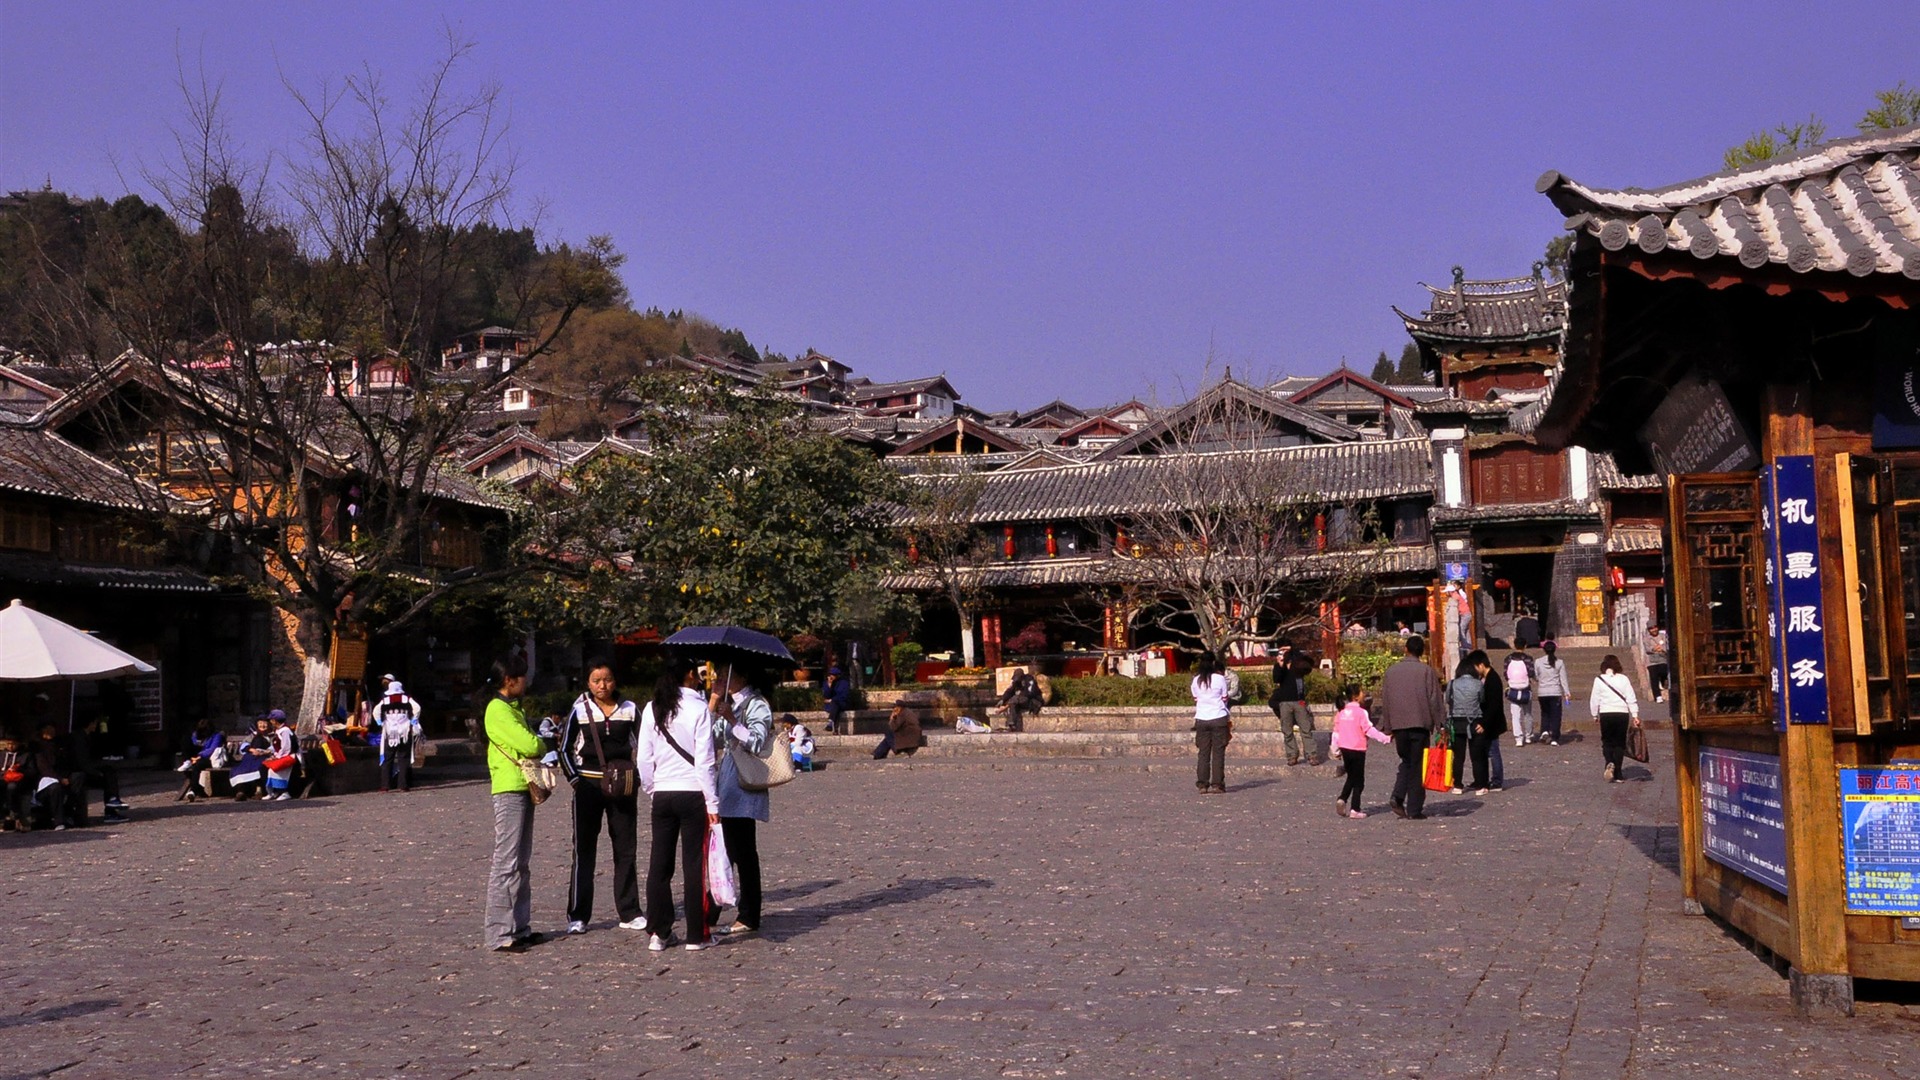 Lijiang ancient town atmosphere (2) (old Hong OK works) #12 - 1920x1080